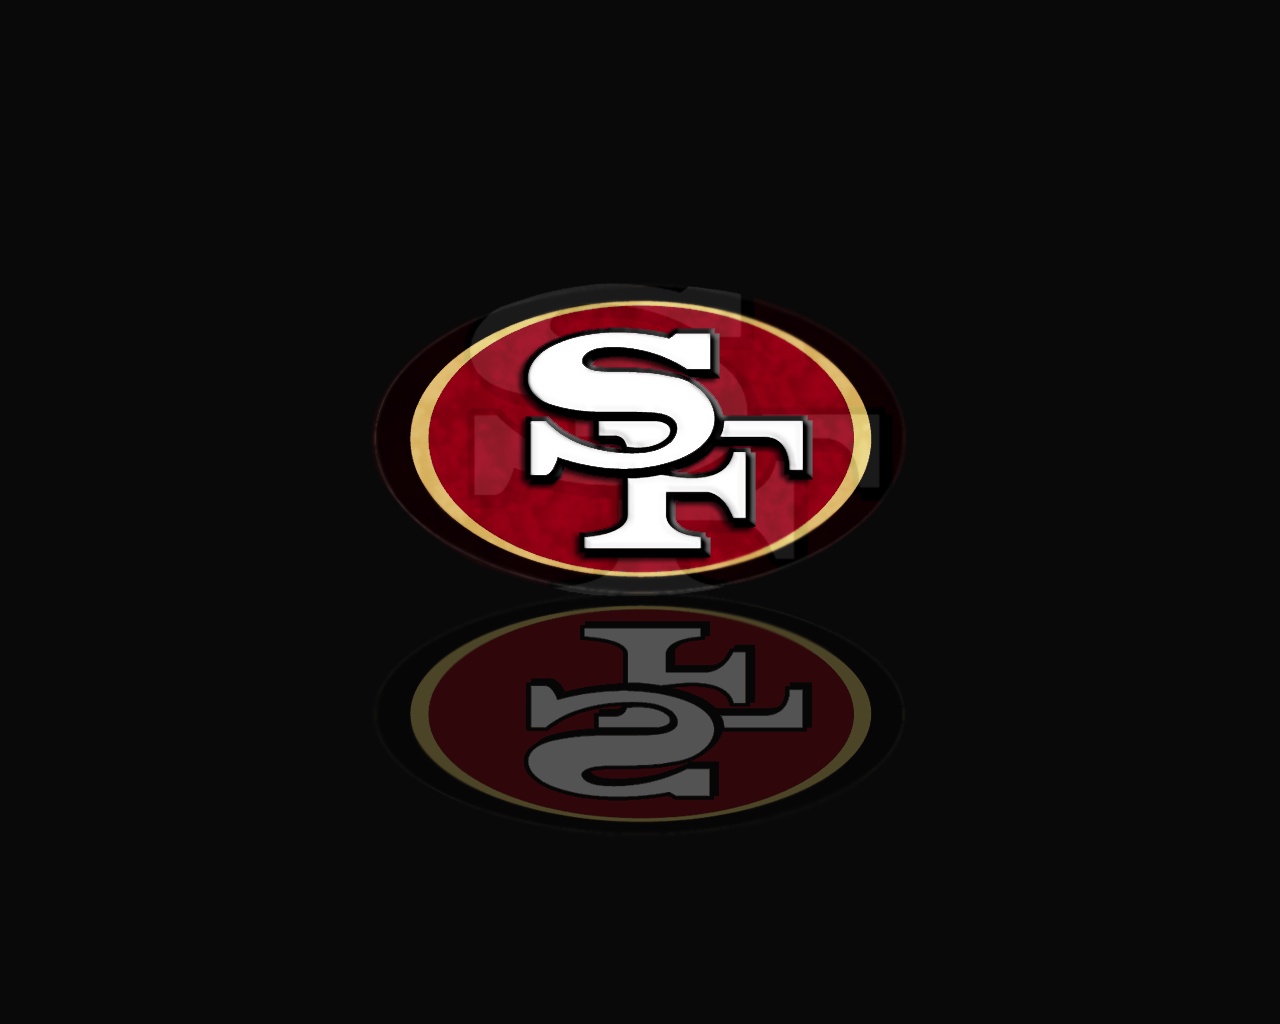 Get the best 49ers logo black background for your phone or desktop  background